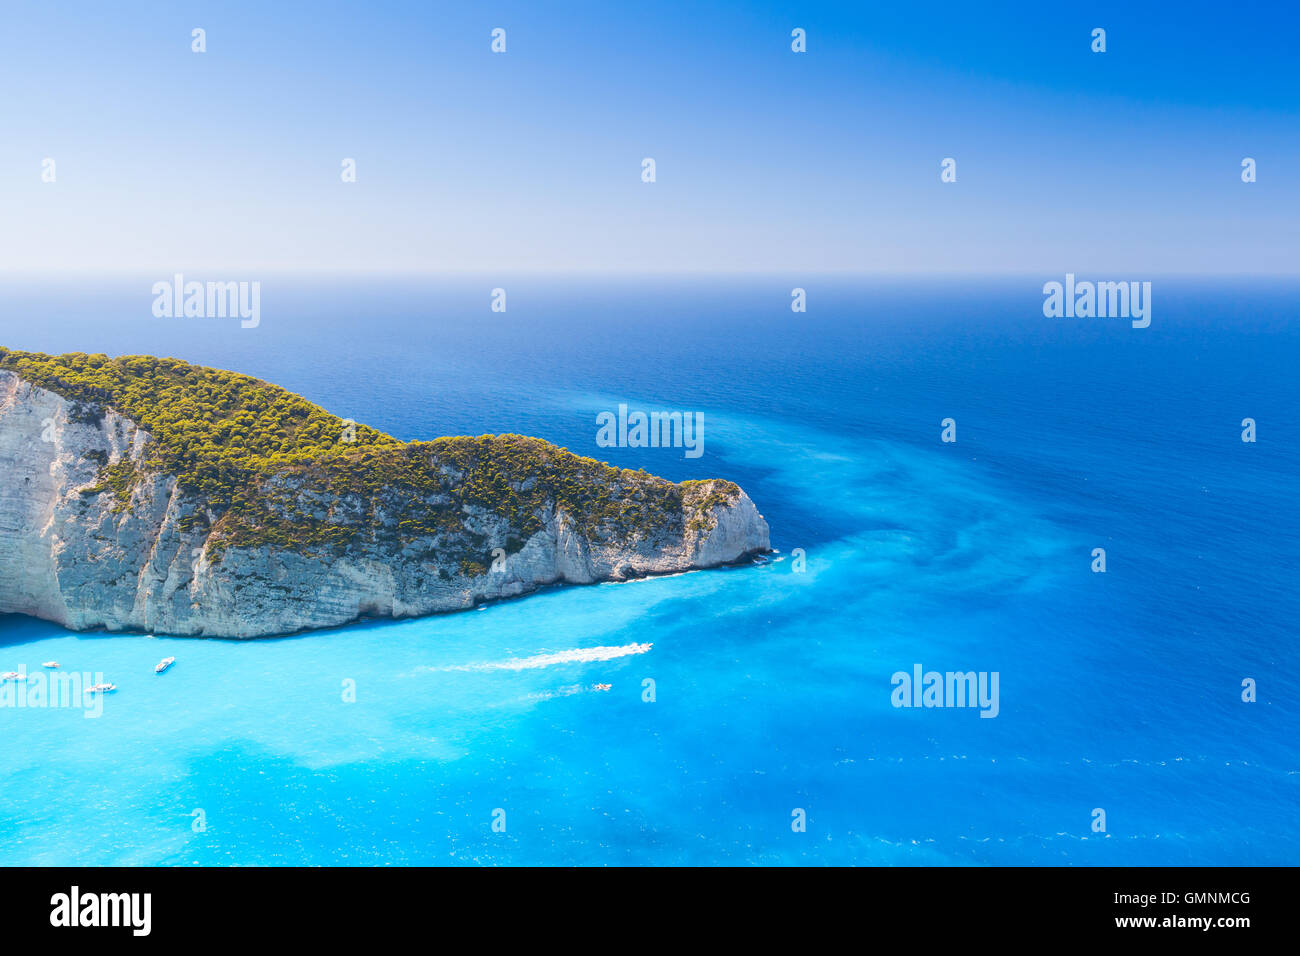 Navagio Bay. The most famous landmark of Greek island Zakynthos in the Ionian Sea Stock Photo